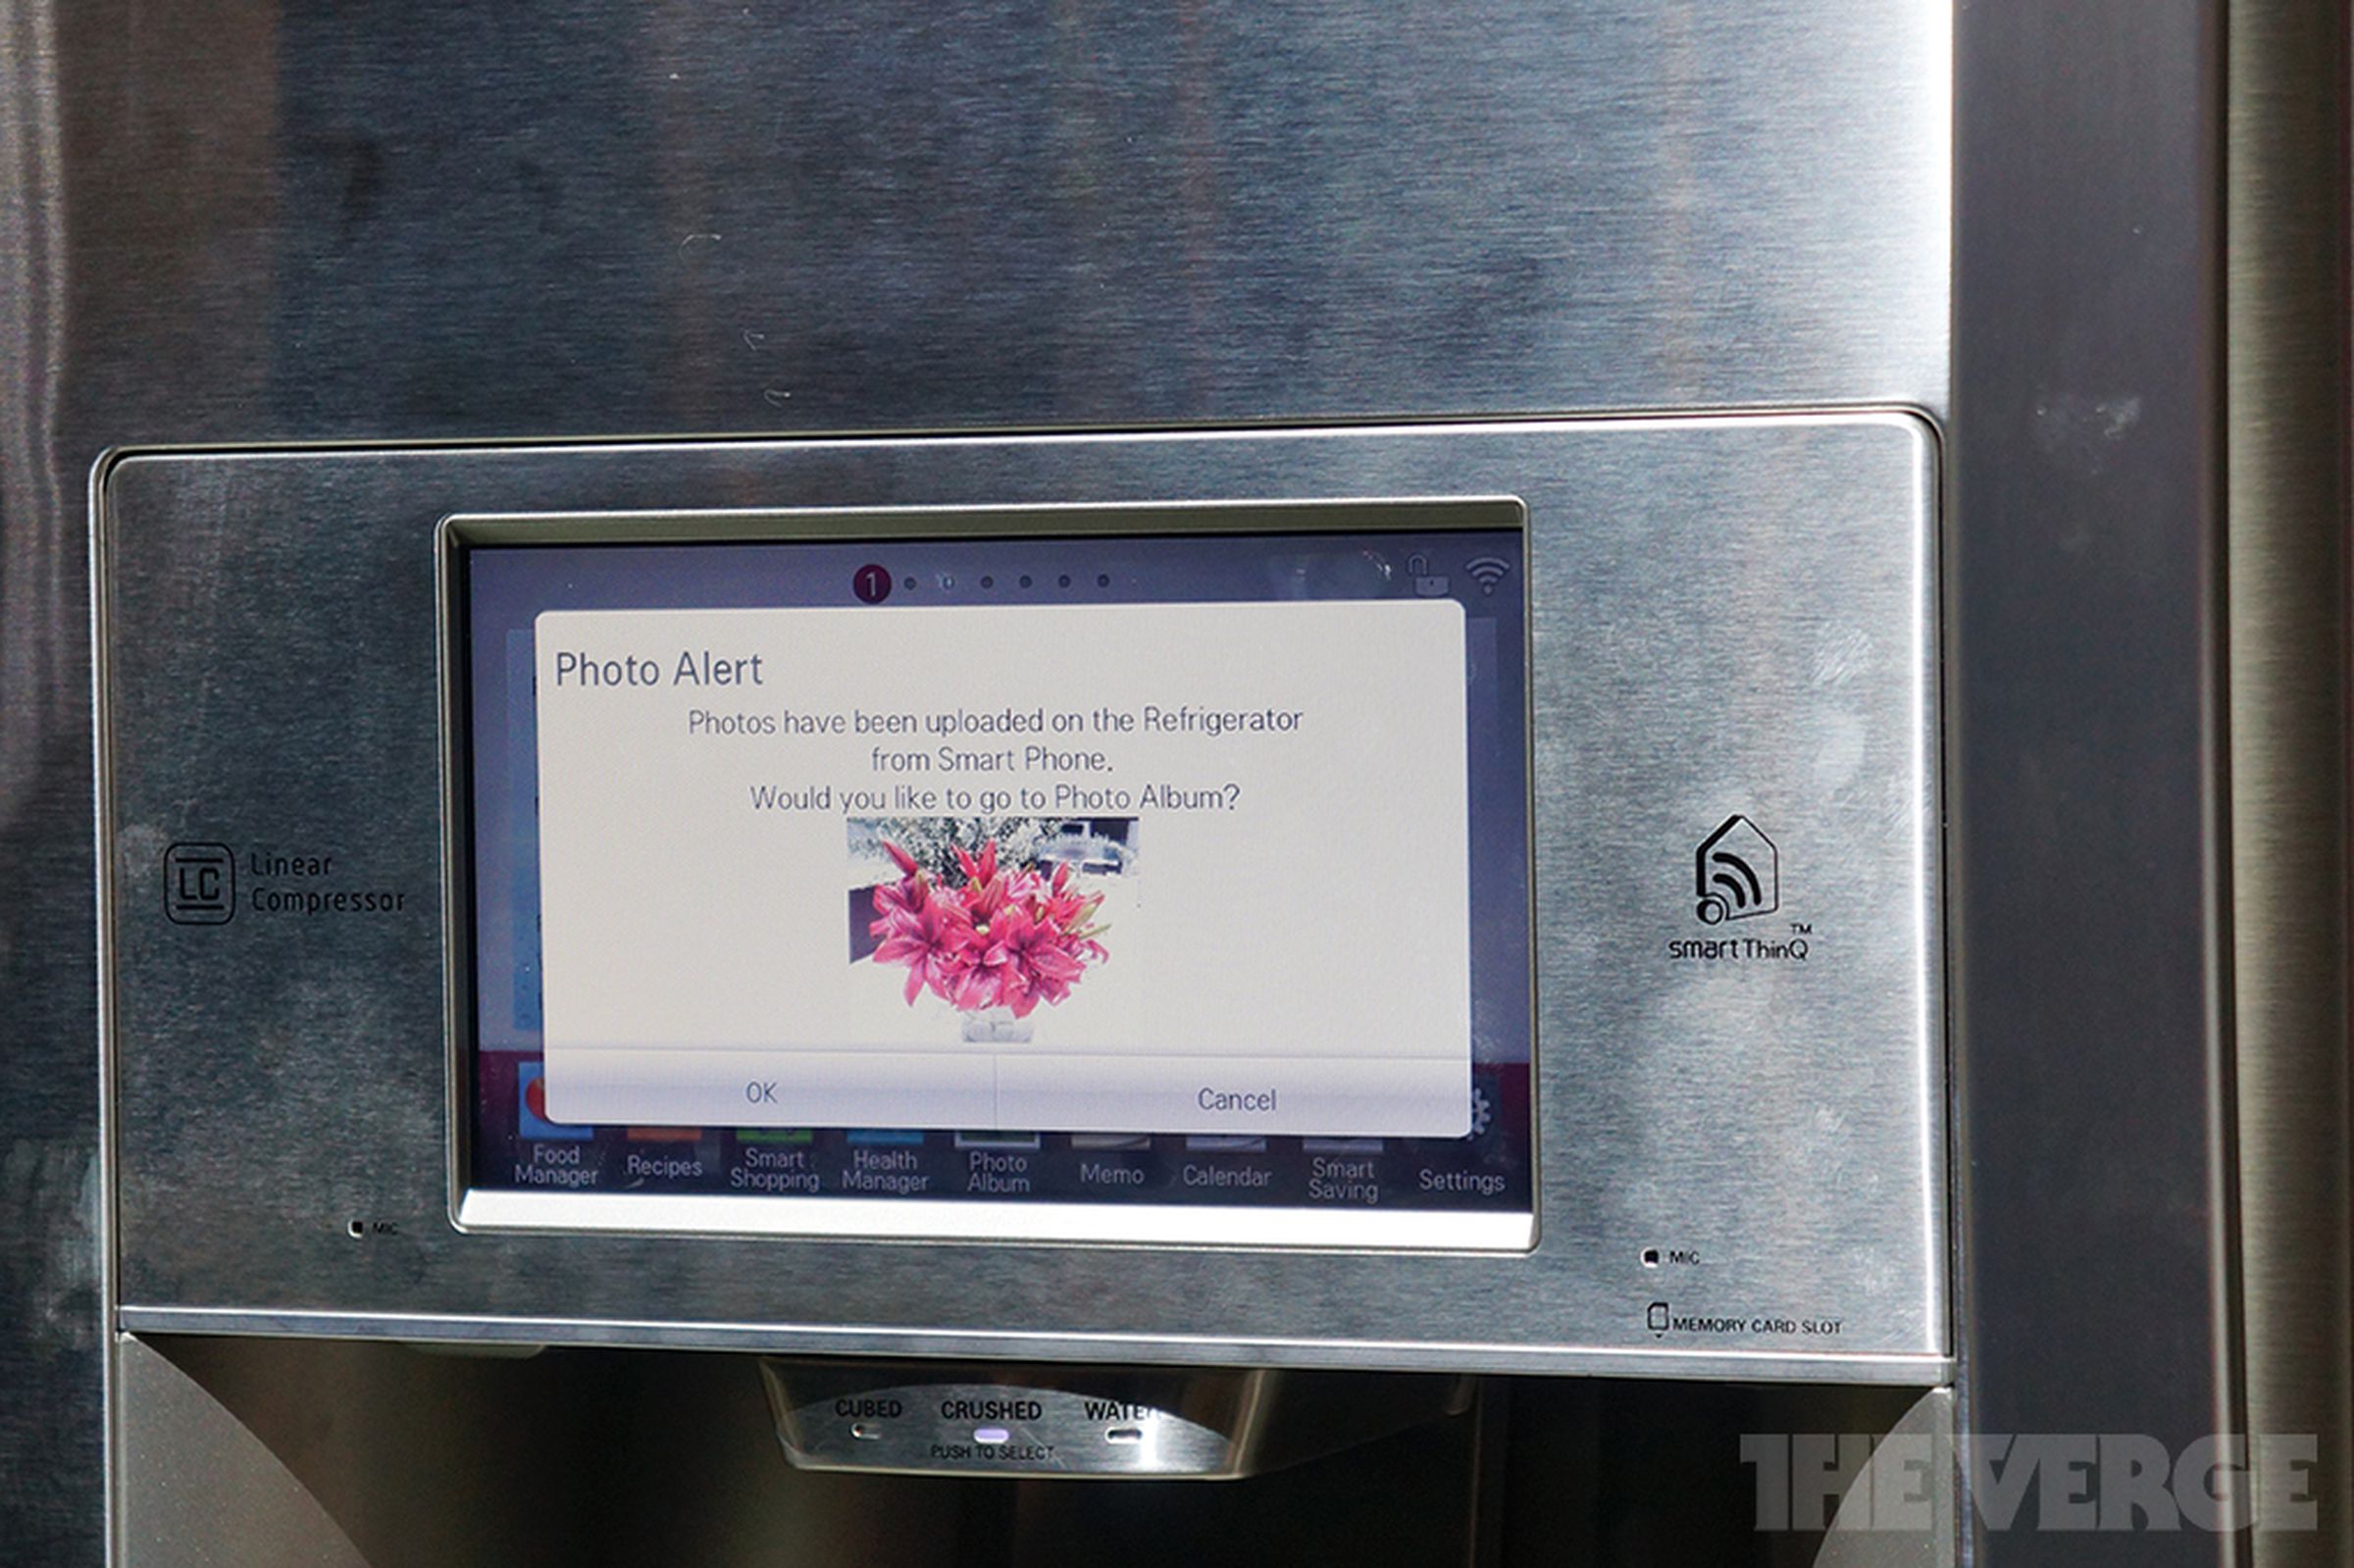 LG's texting smart appliances